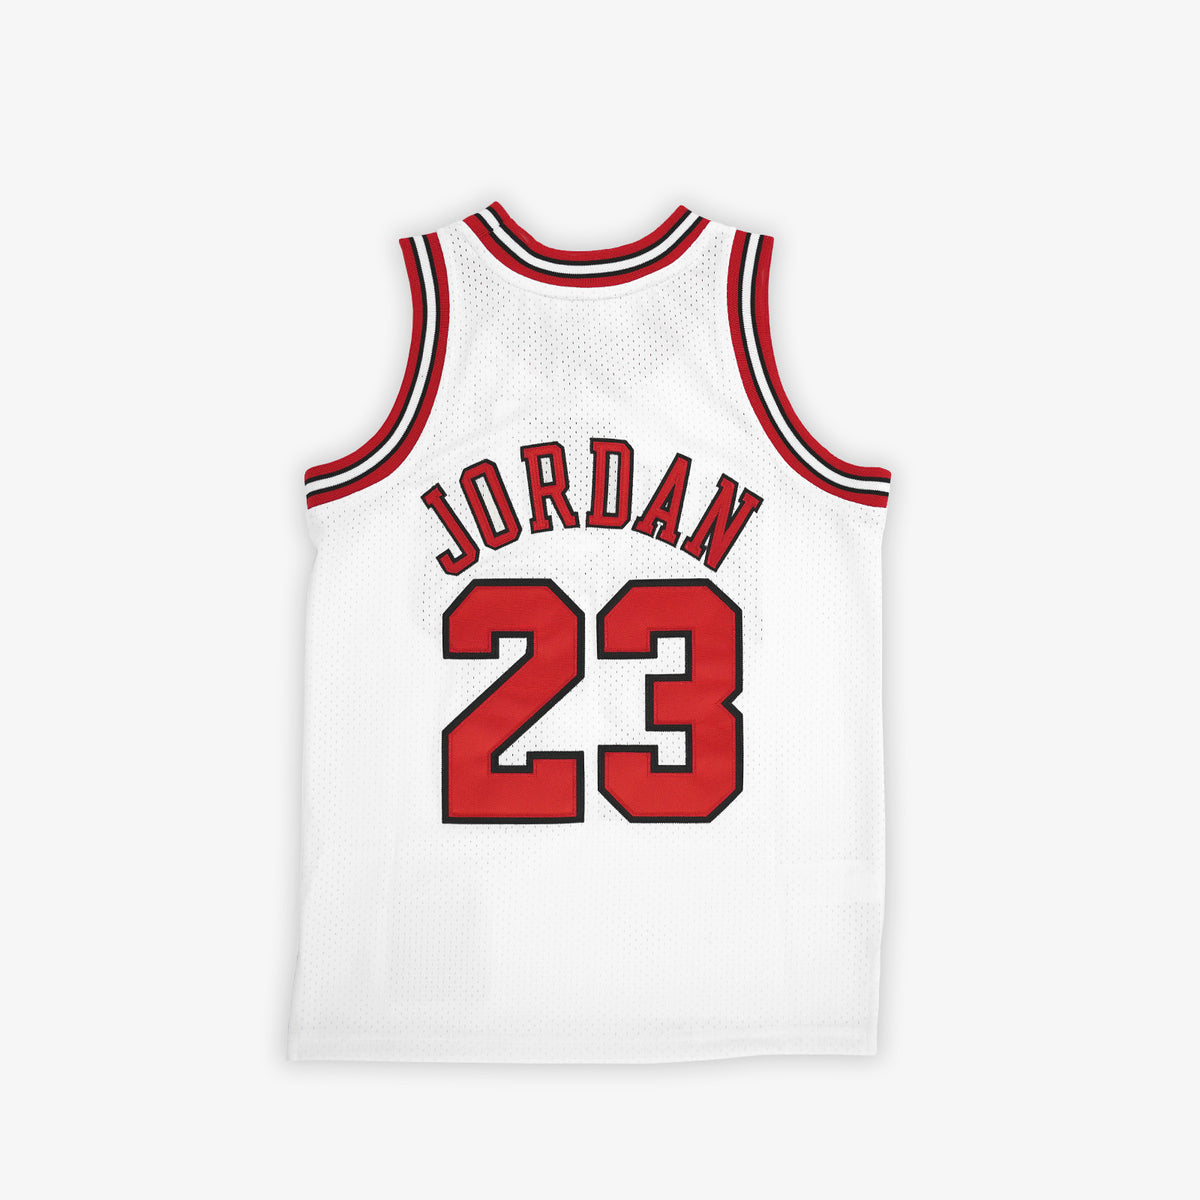 Michael Jordan Chicago Bulls 97-98 Authentic Youth Hardwood Classic Jersey - White